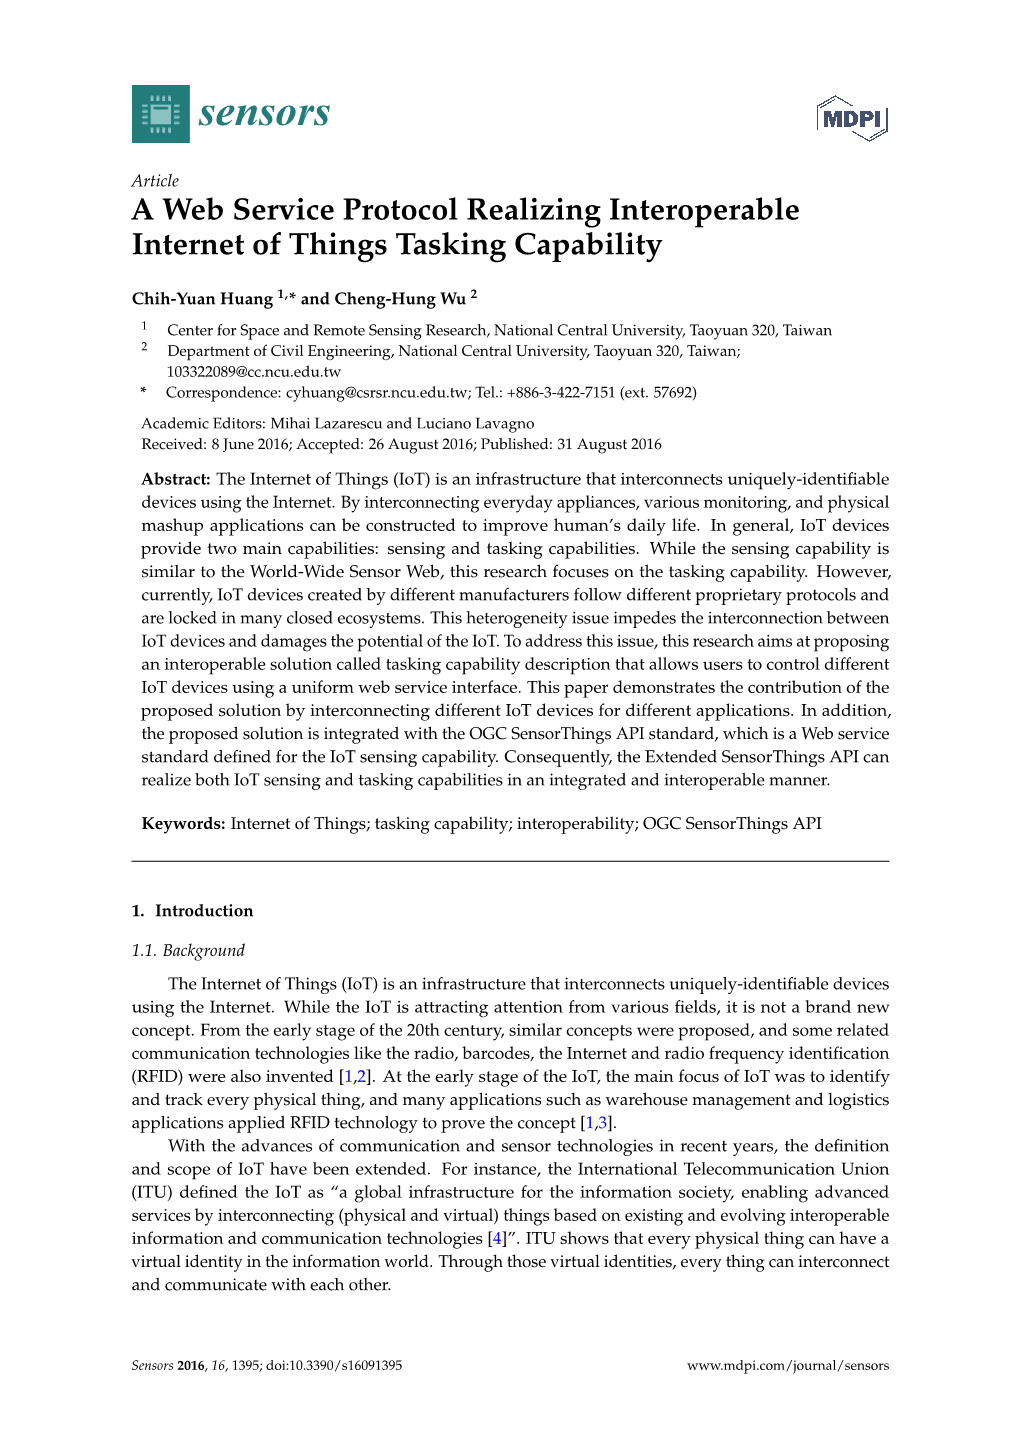 A Web Service Protocol Realizing Interoperable Internet of Things Tasking Capability